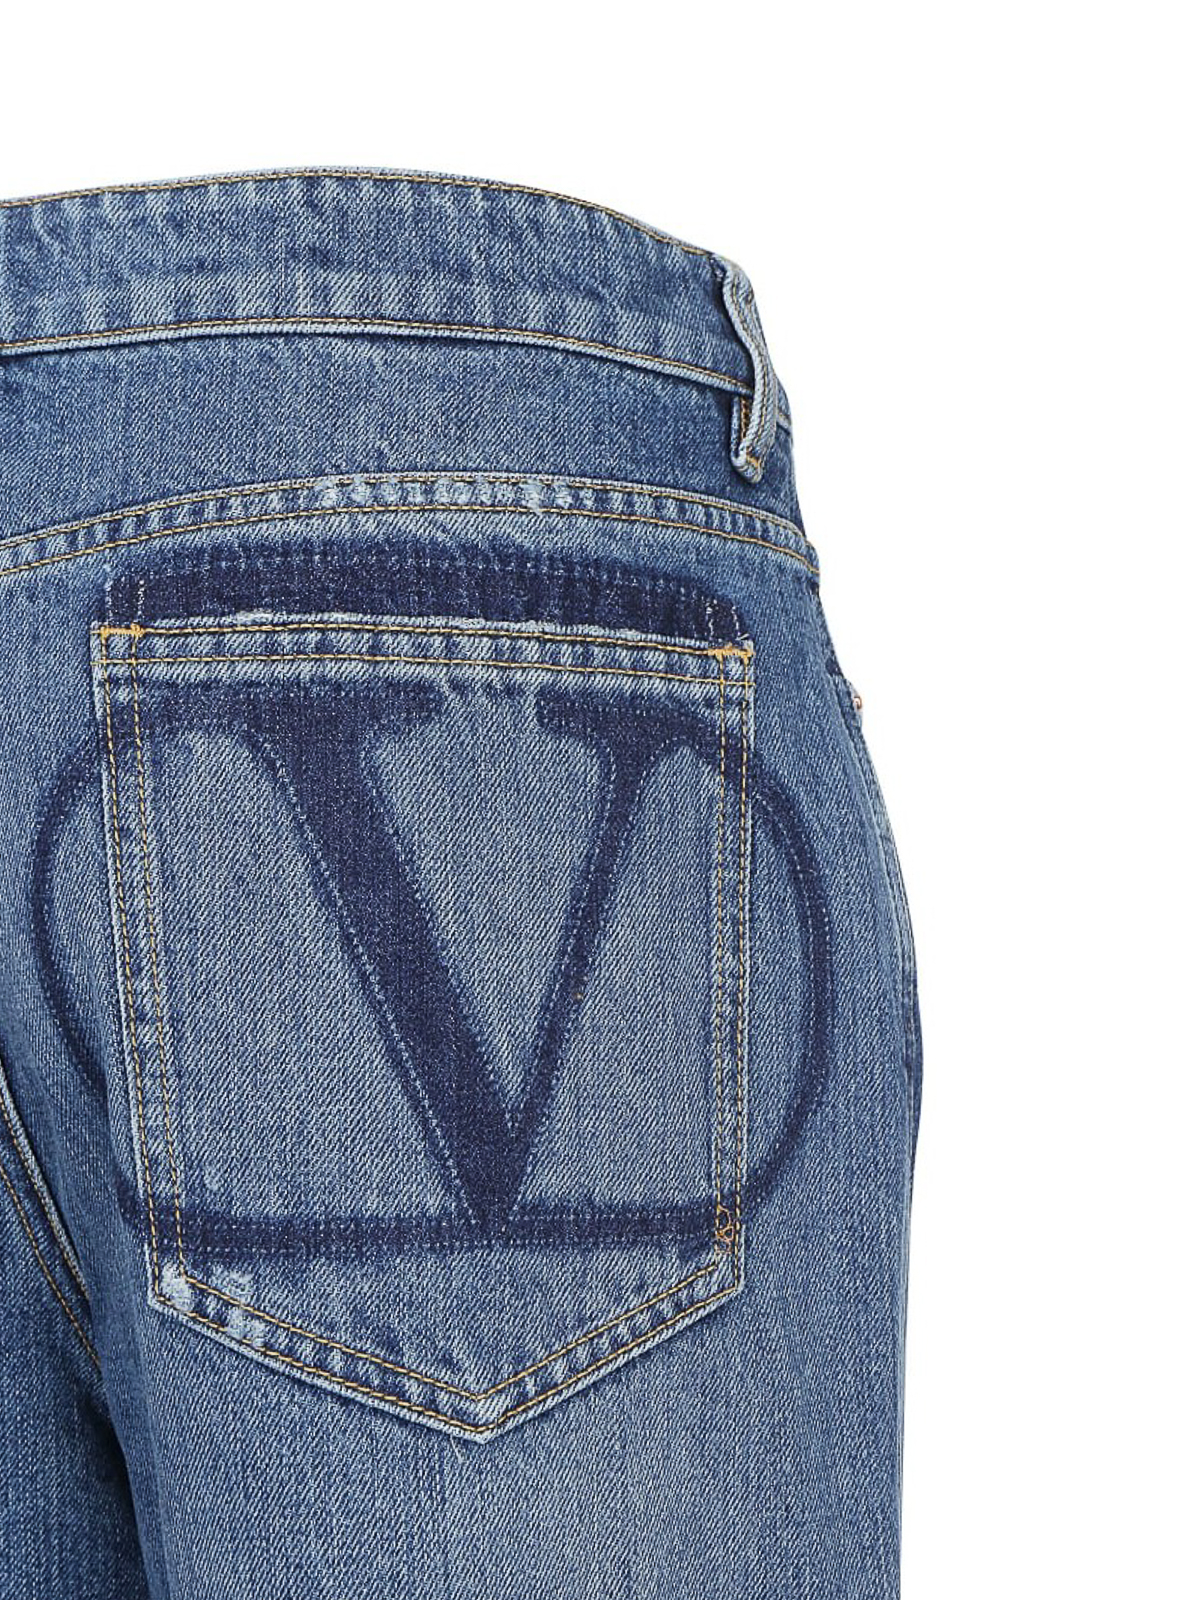 valentino garavani jeans